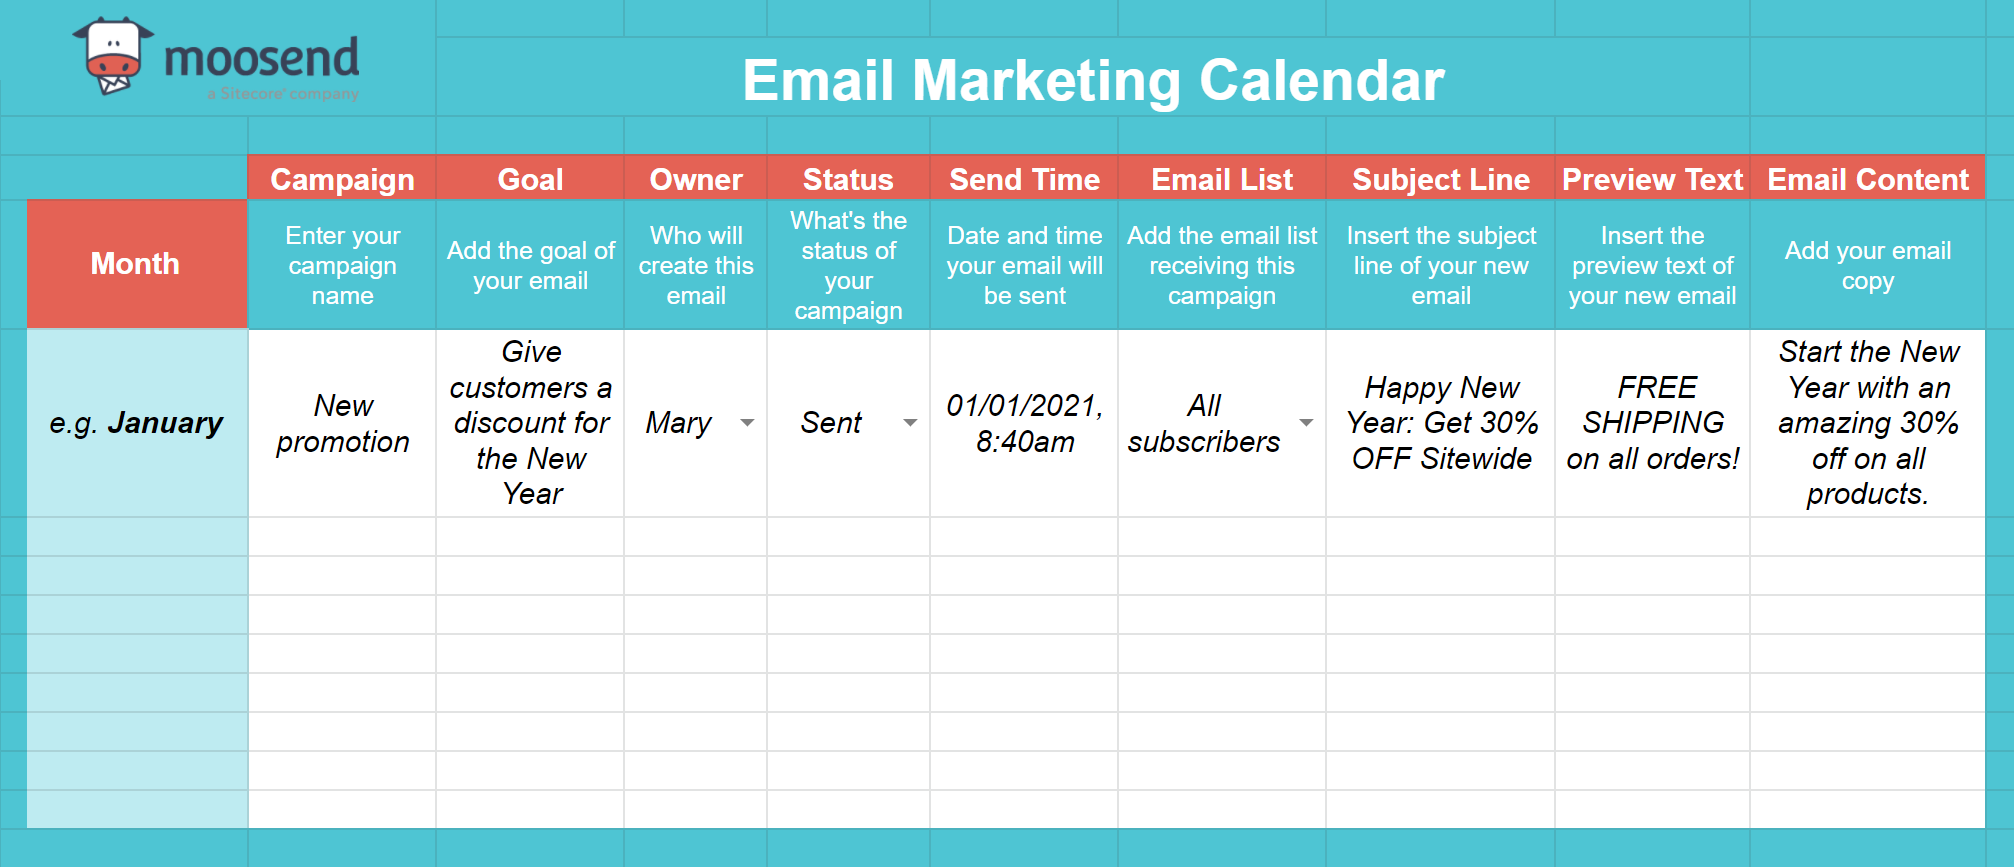 email marketing calendar template